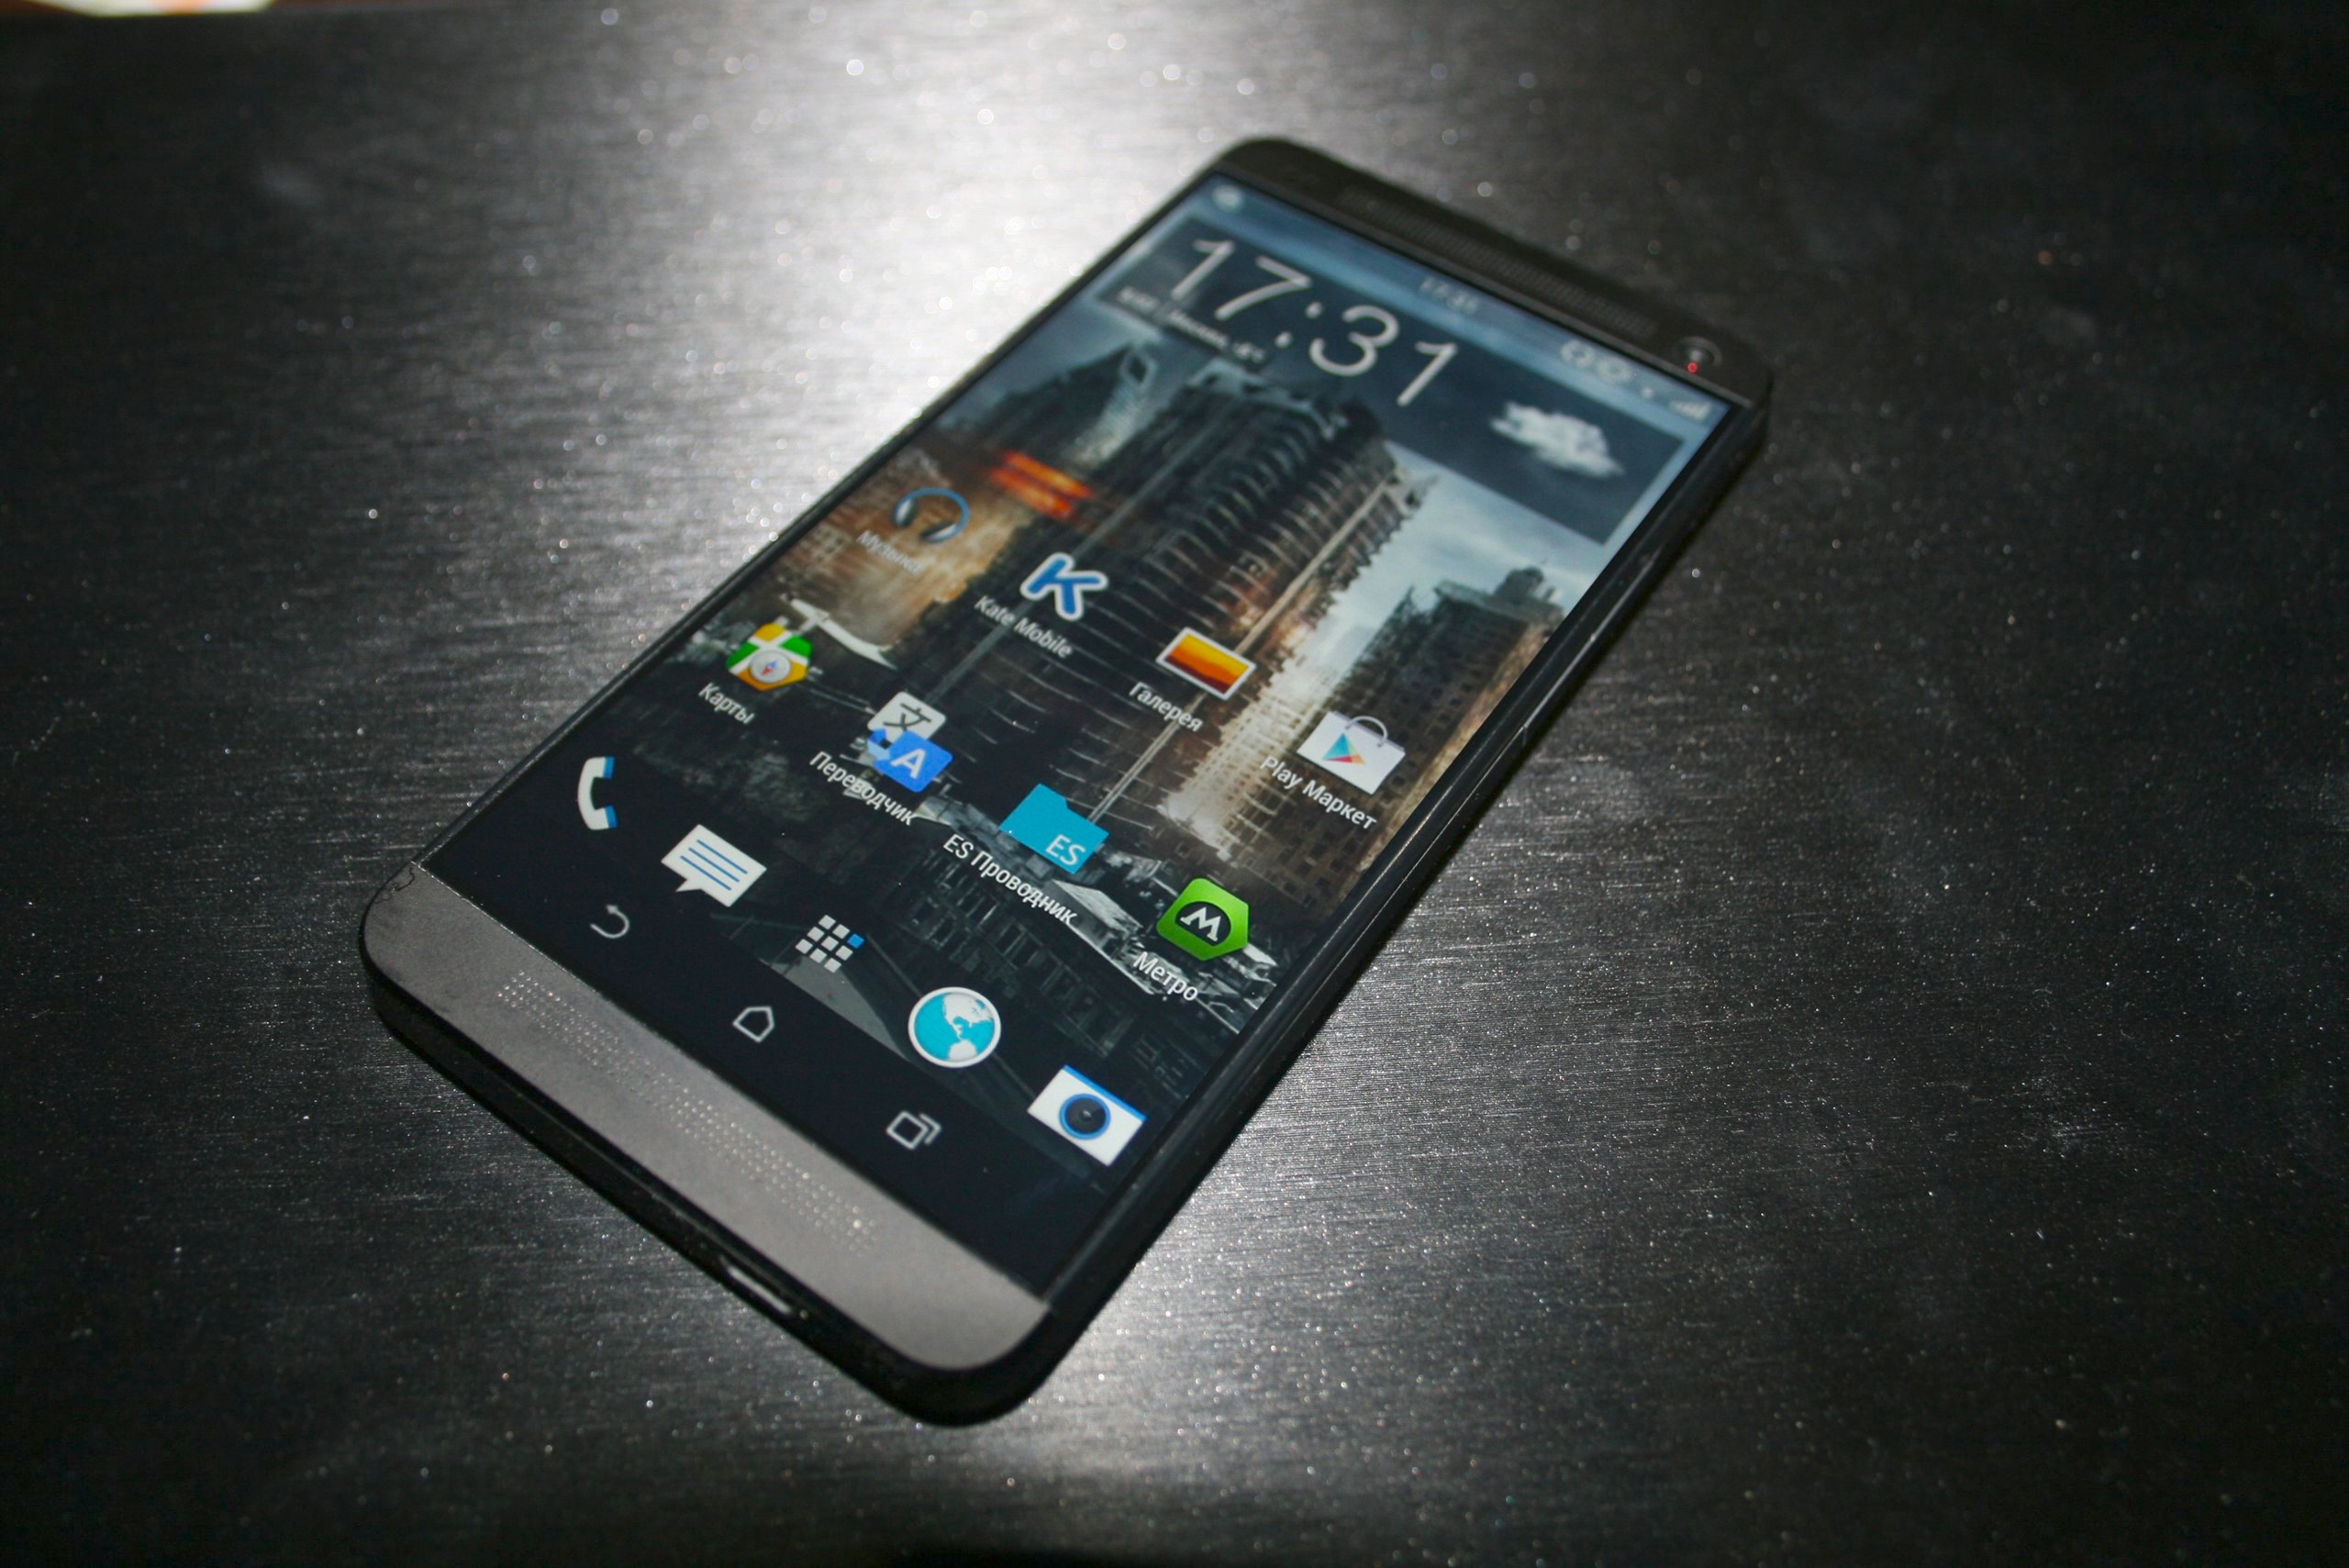 HTC-One-Plus-M8-front-2.jpg